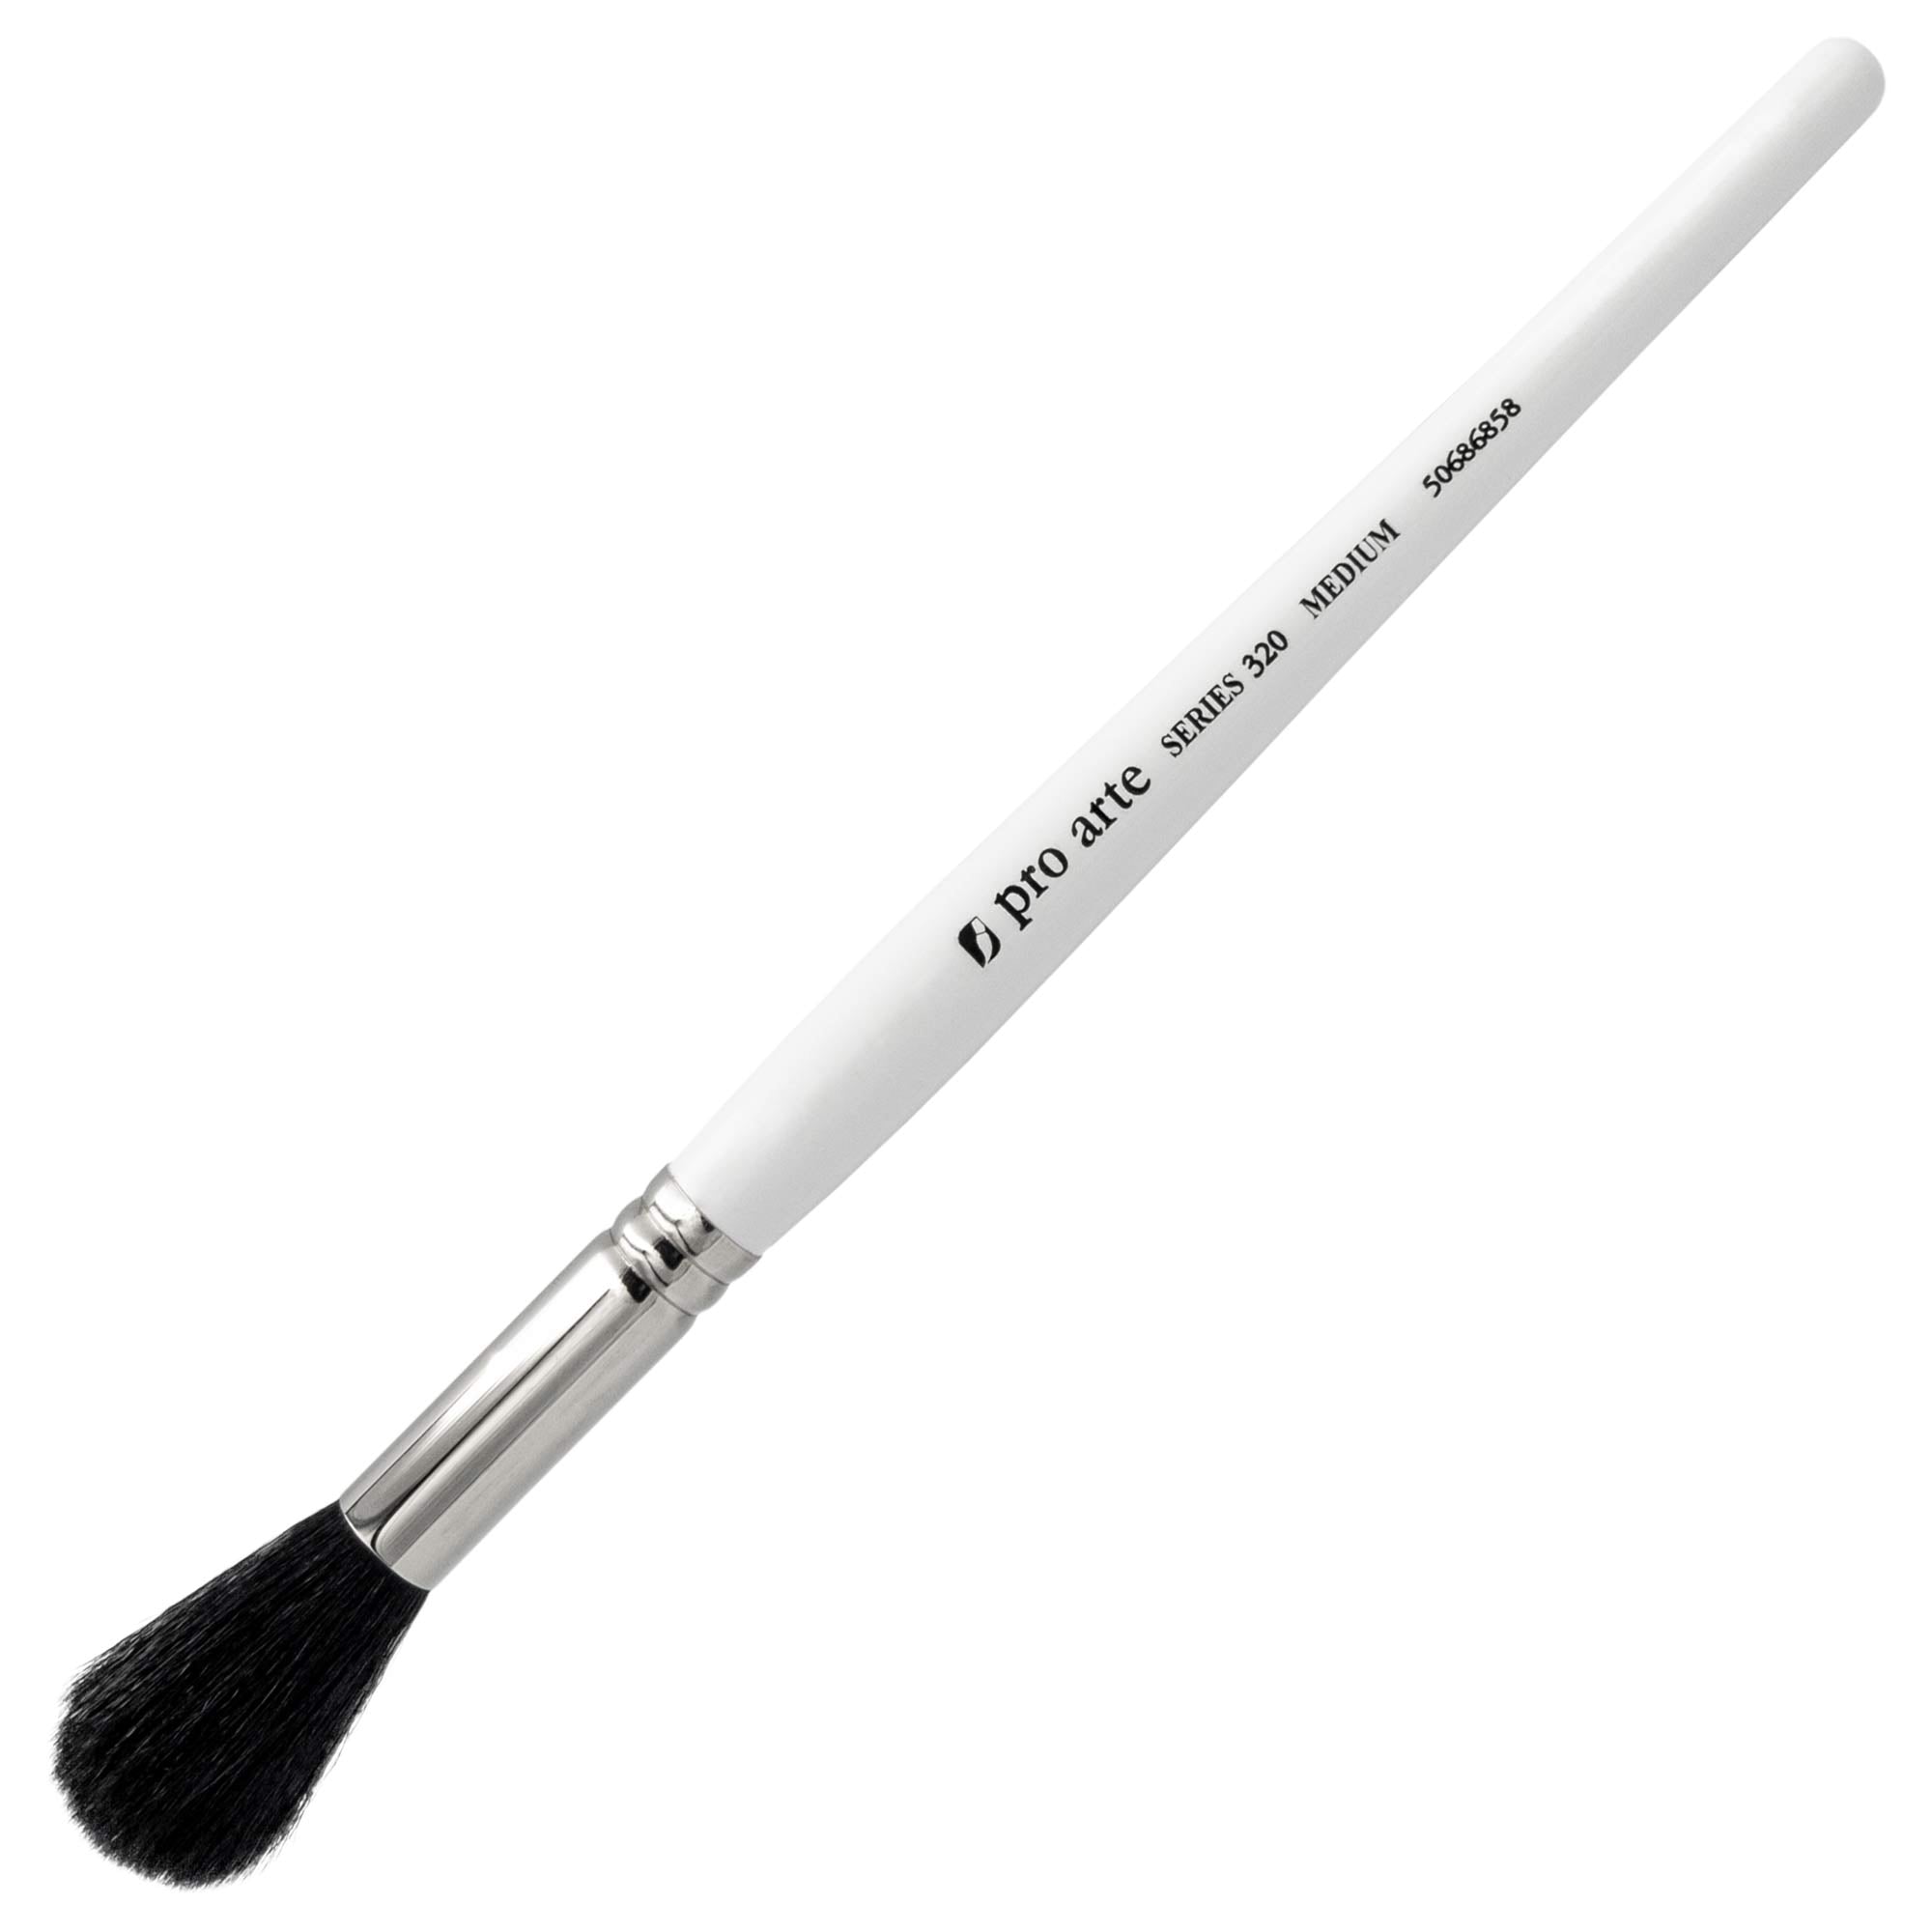 Pro Arte Series 320 - Mop Brush